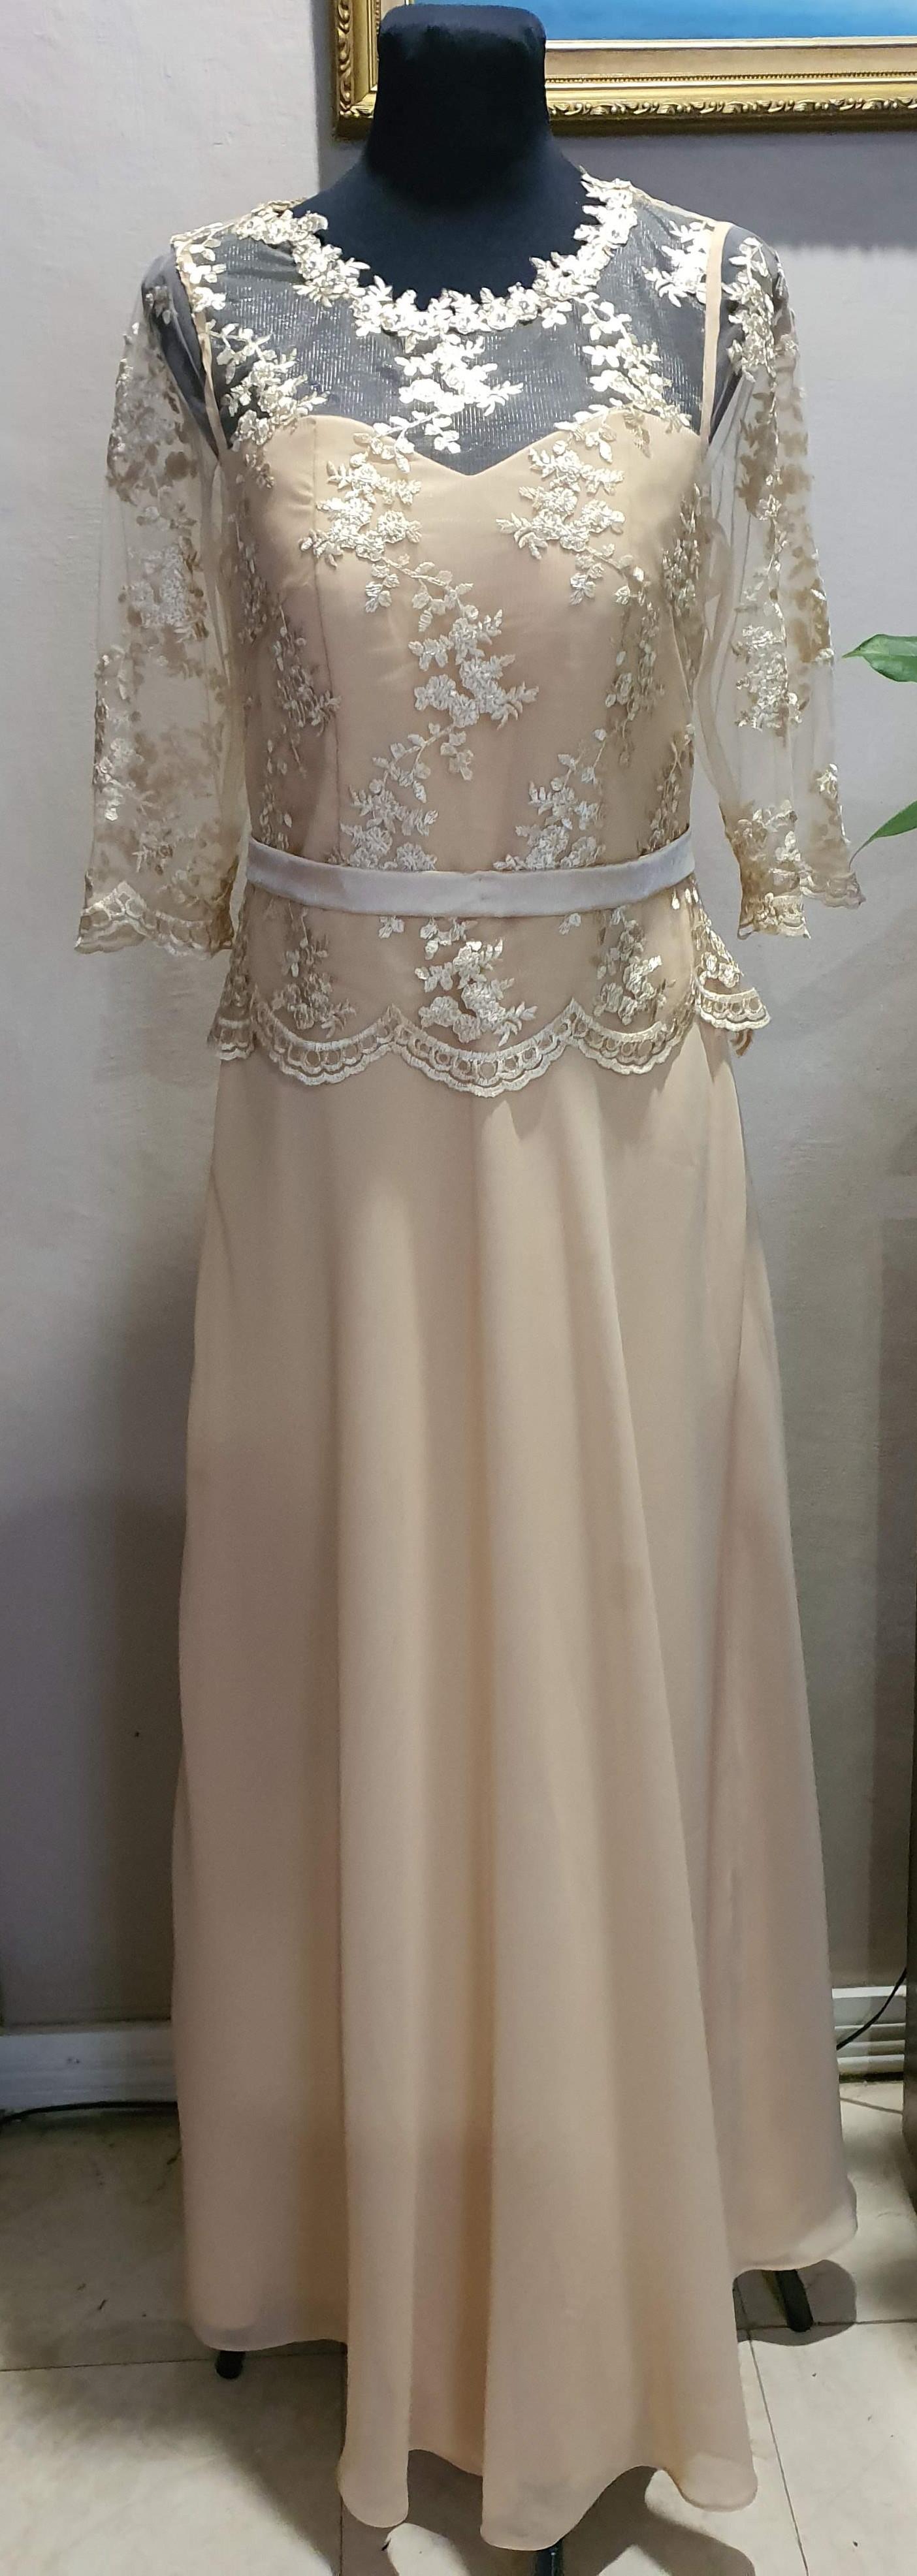 [Get 36+] Simple Principal Sponsor Dress For Wedding